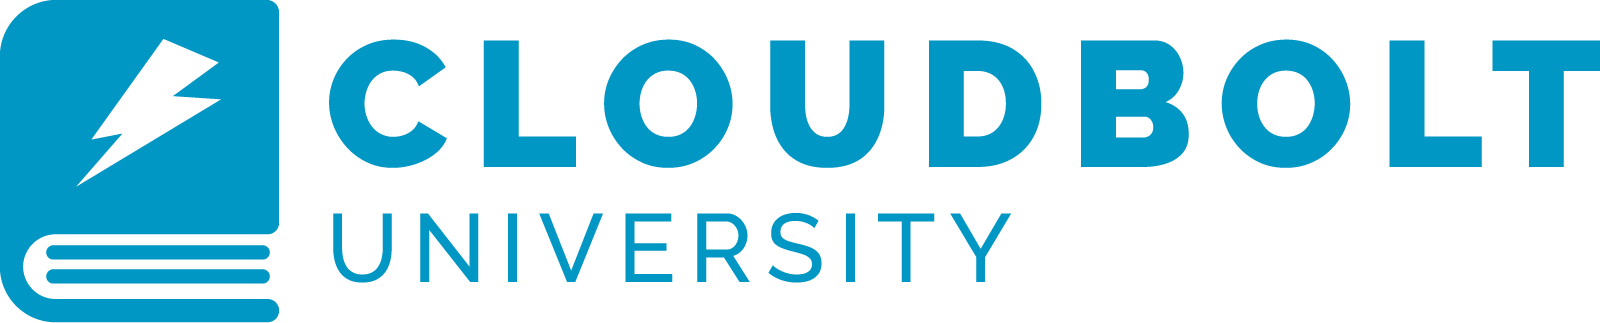 CloudBolt University